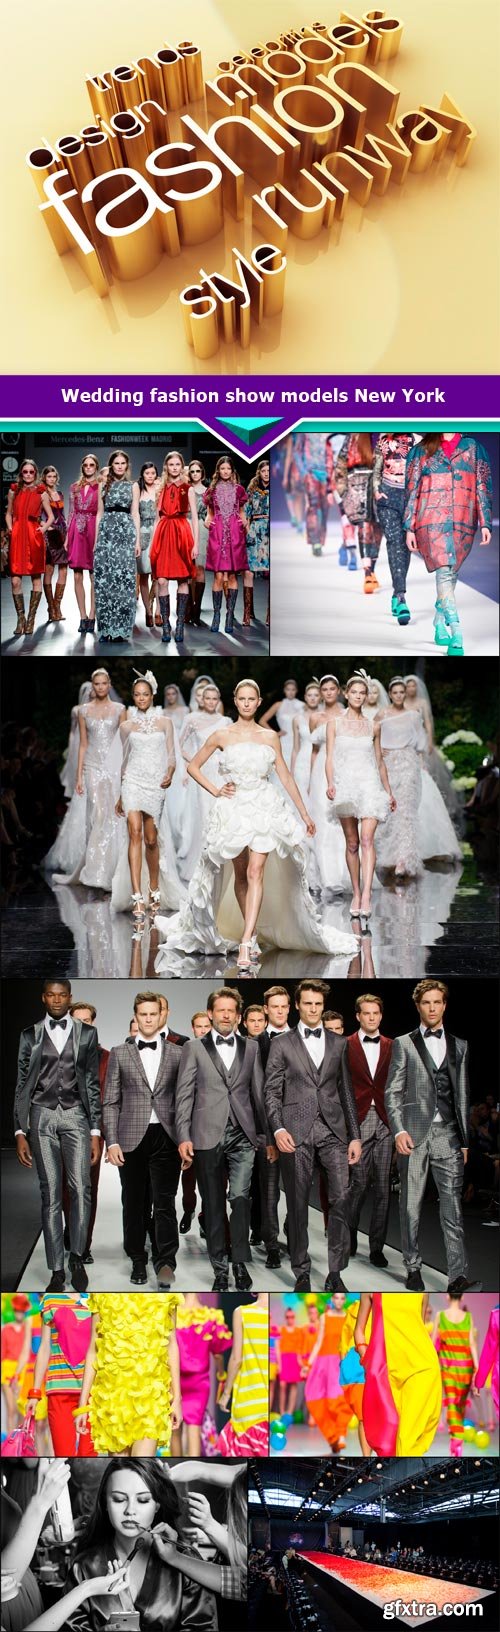 Wedding fashion show models New York 9x JPEG